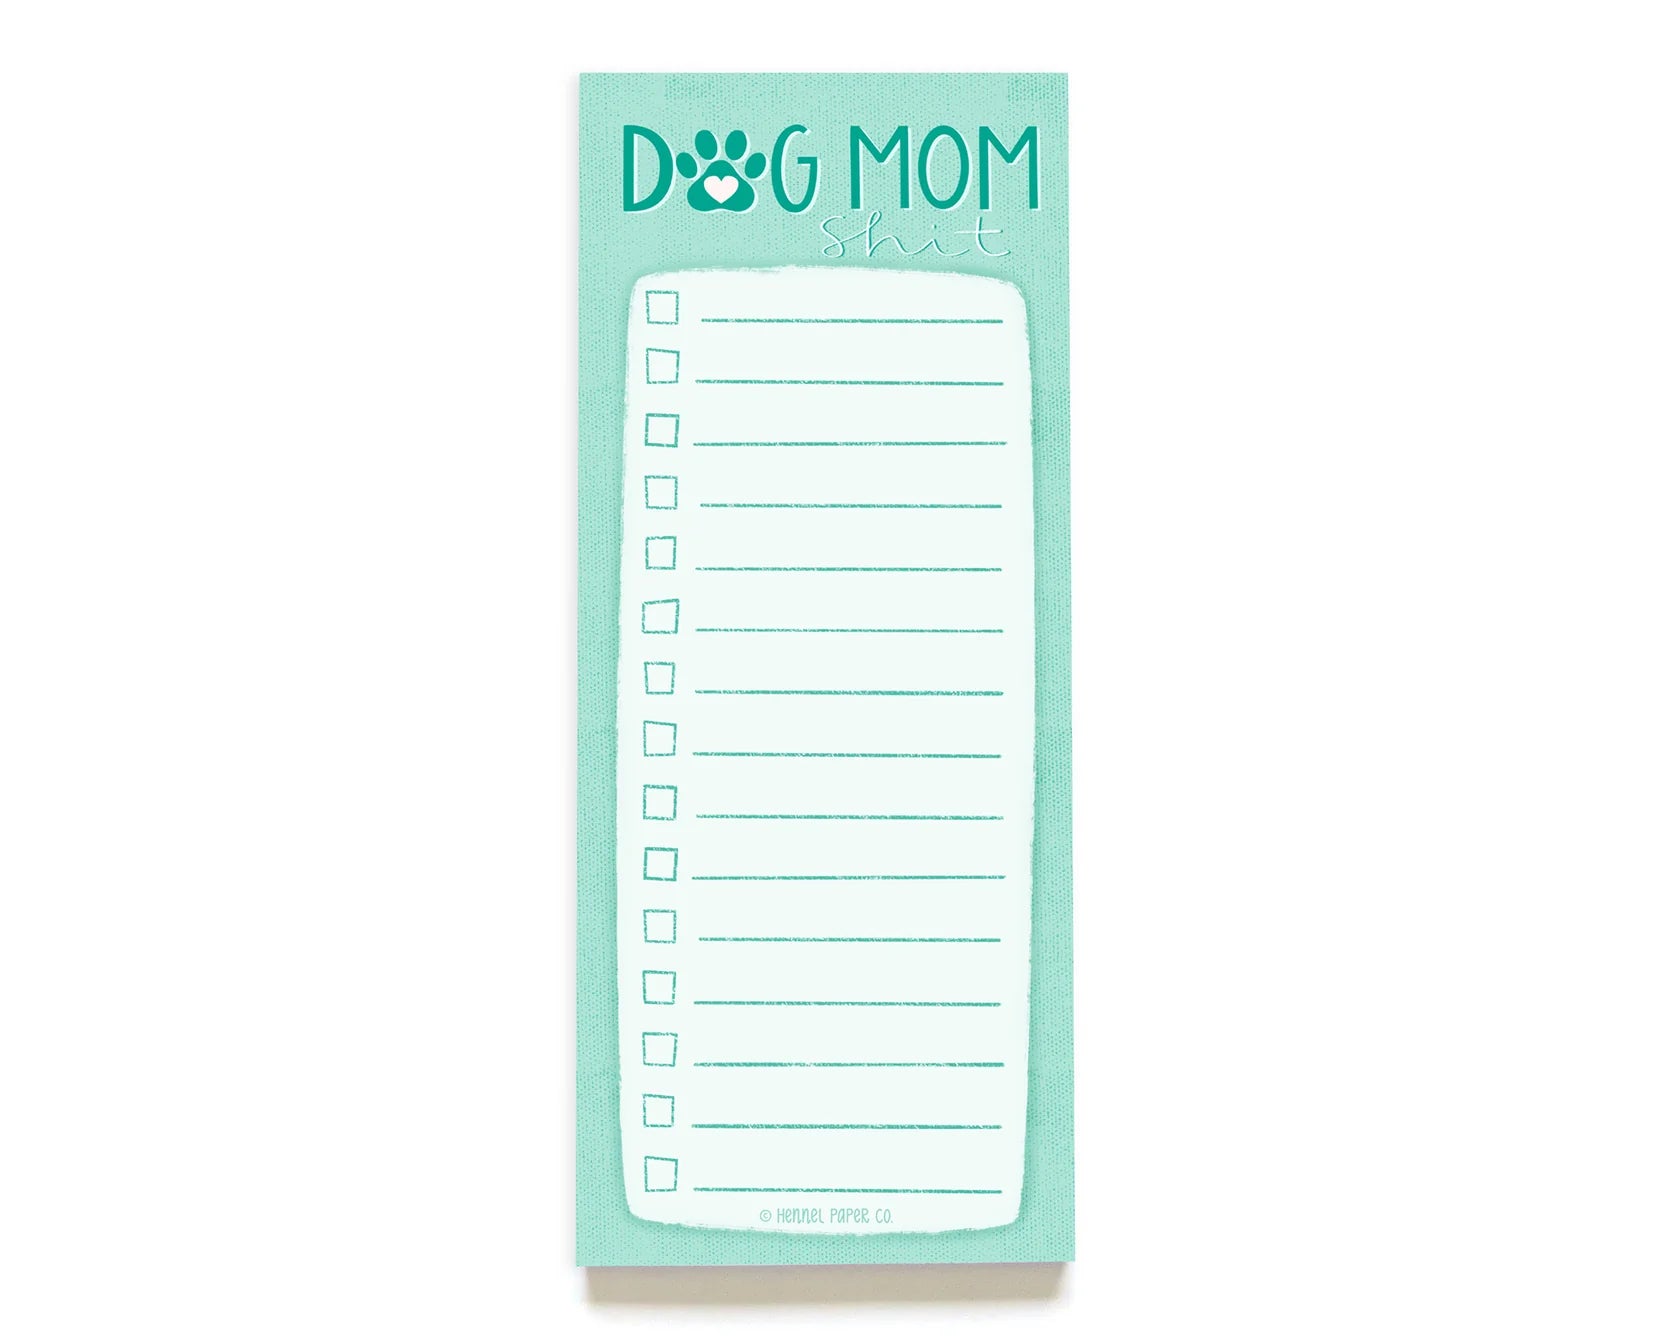 Funny "Dog Mom Shit" notepad design